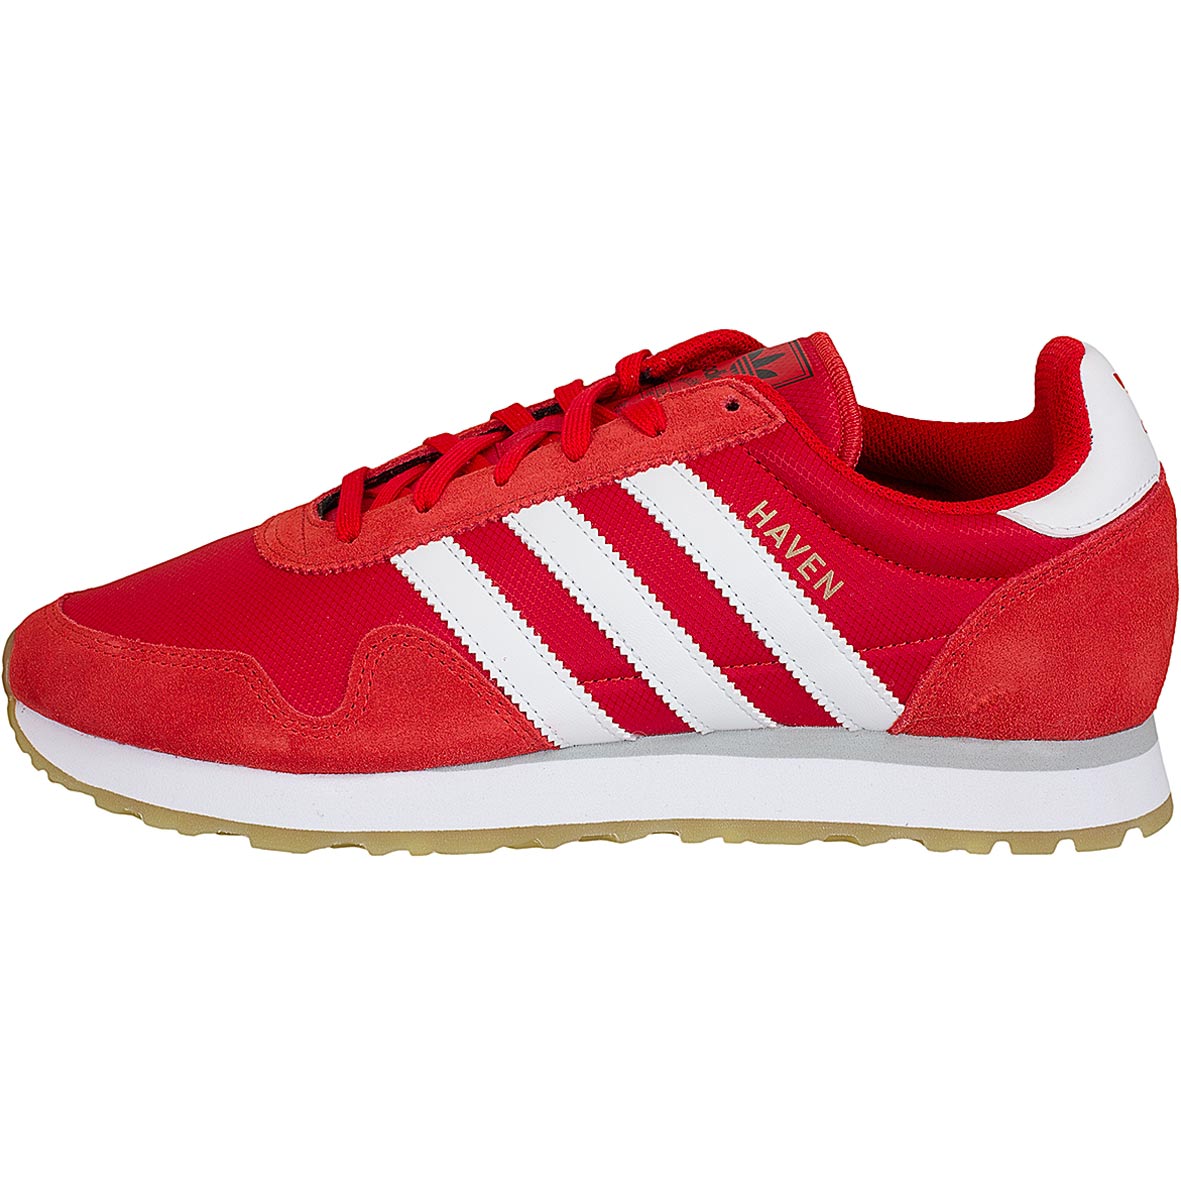 ☆ Adidas Originals Sneaker Haven rot/weiß - hier bestellen!